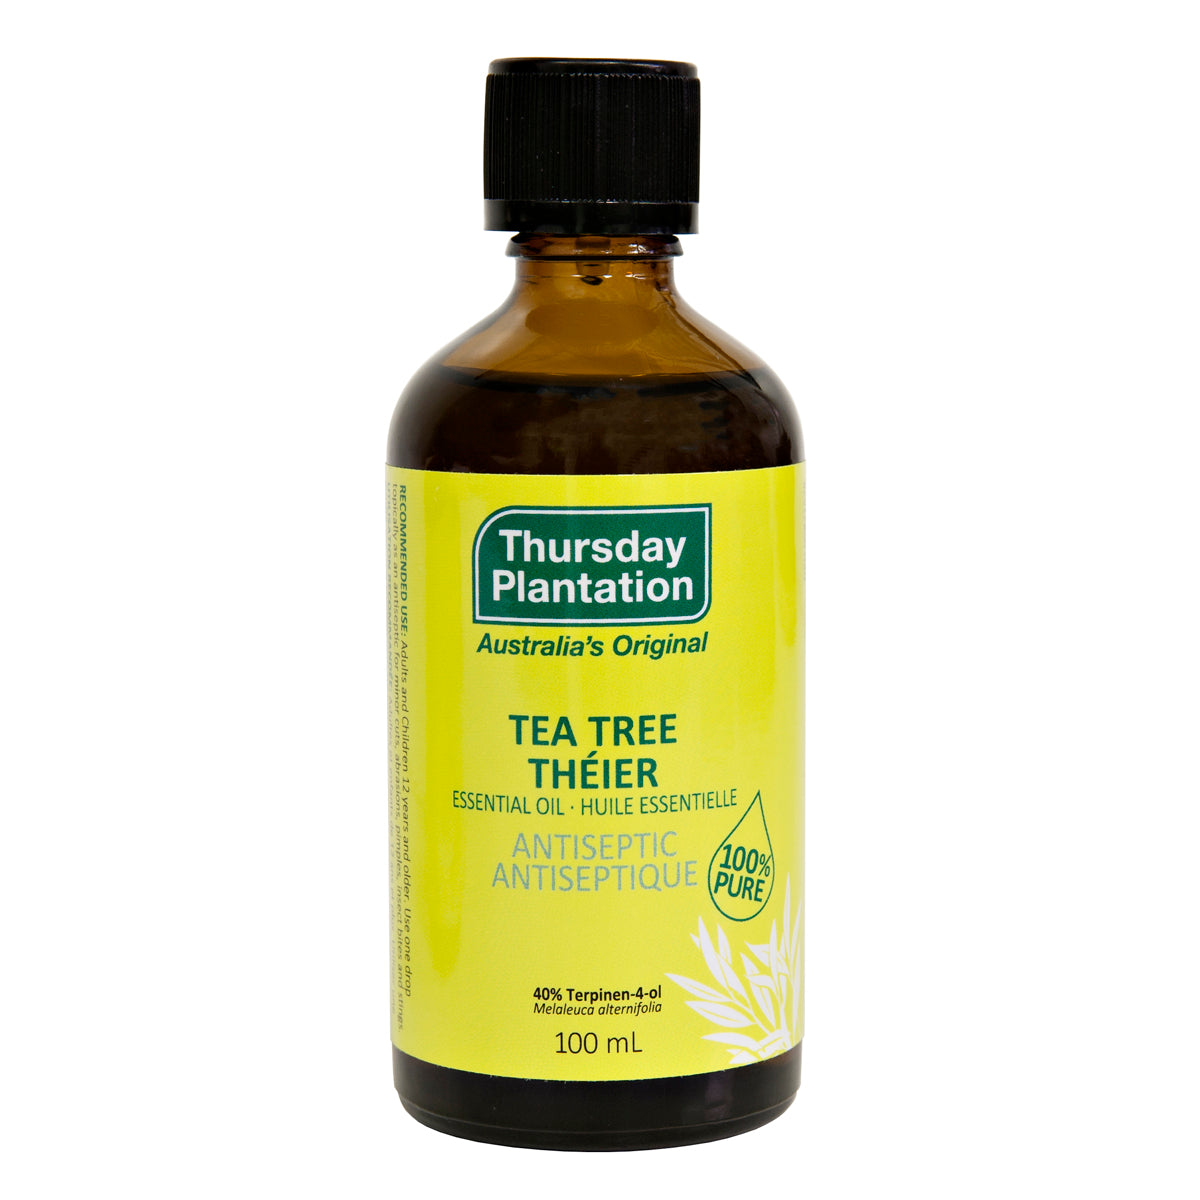 Thursday Plantation Tea Tree Oil 100% Pure - Antiseptic 100mL